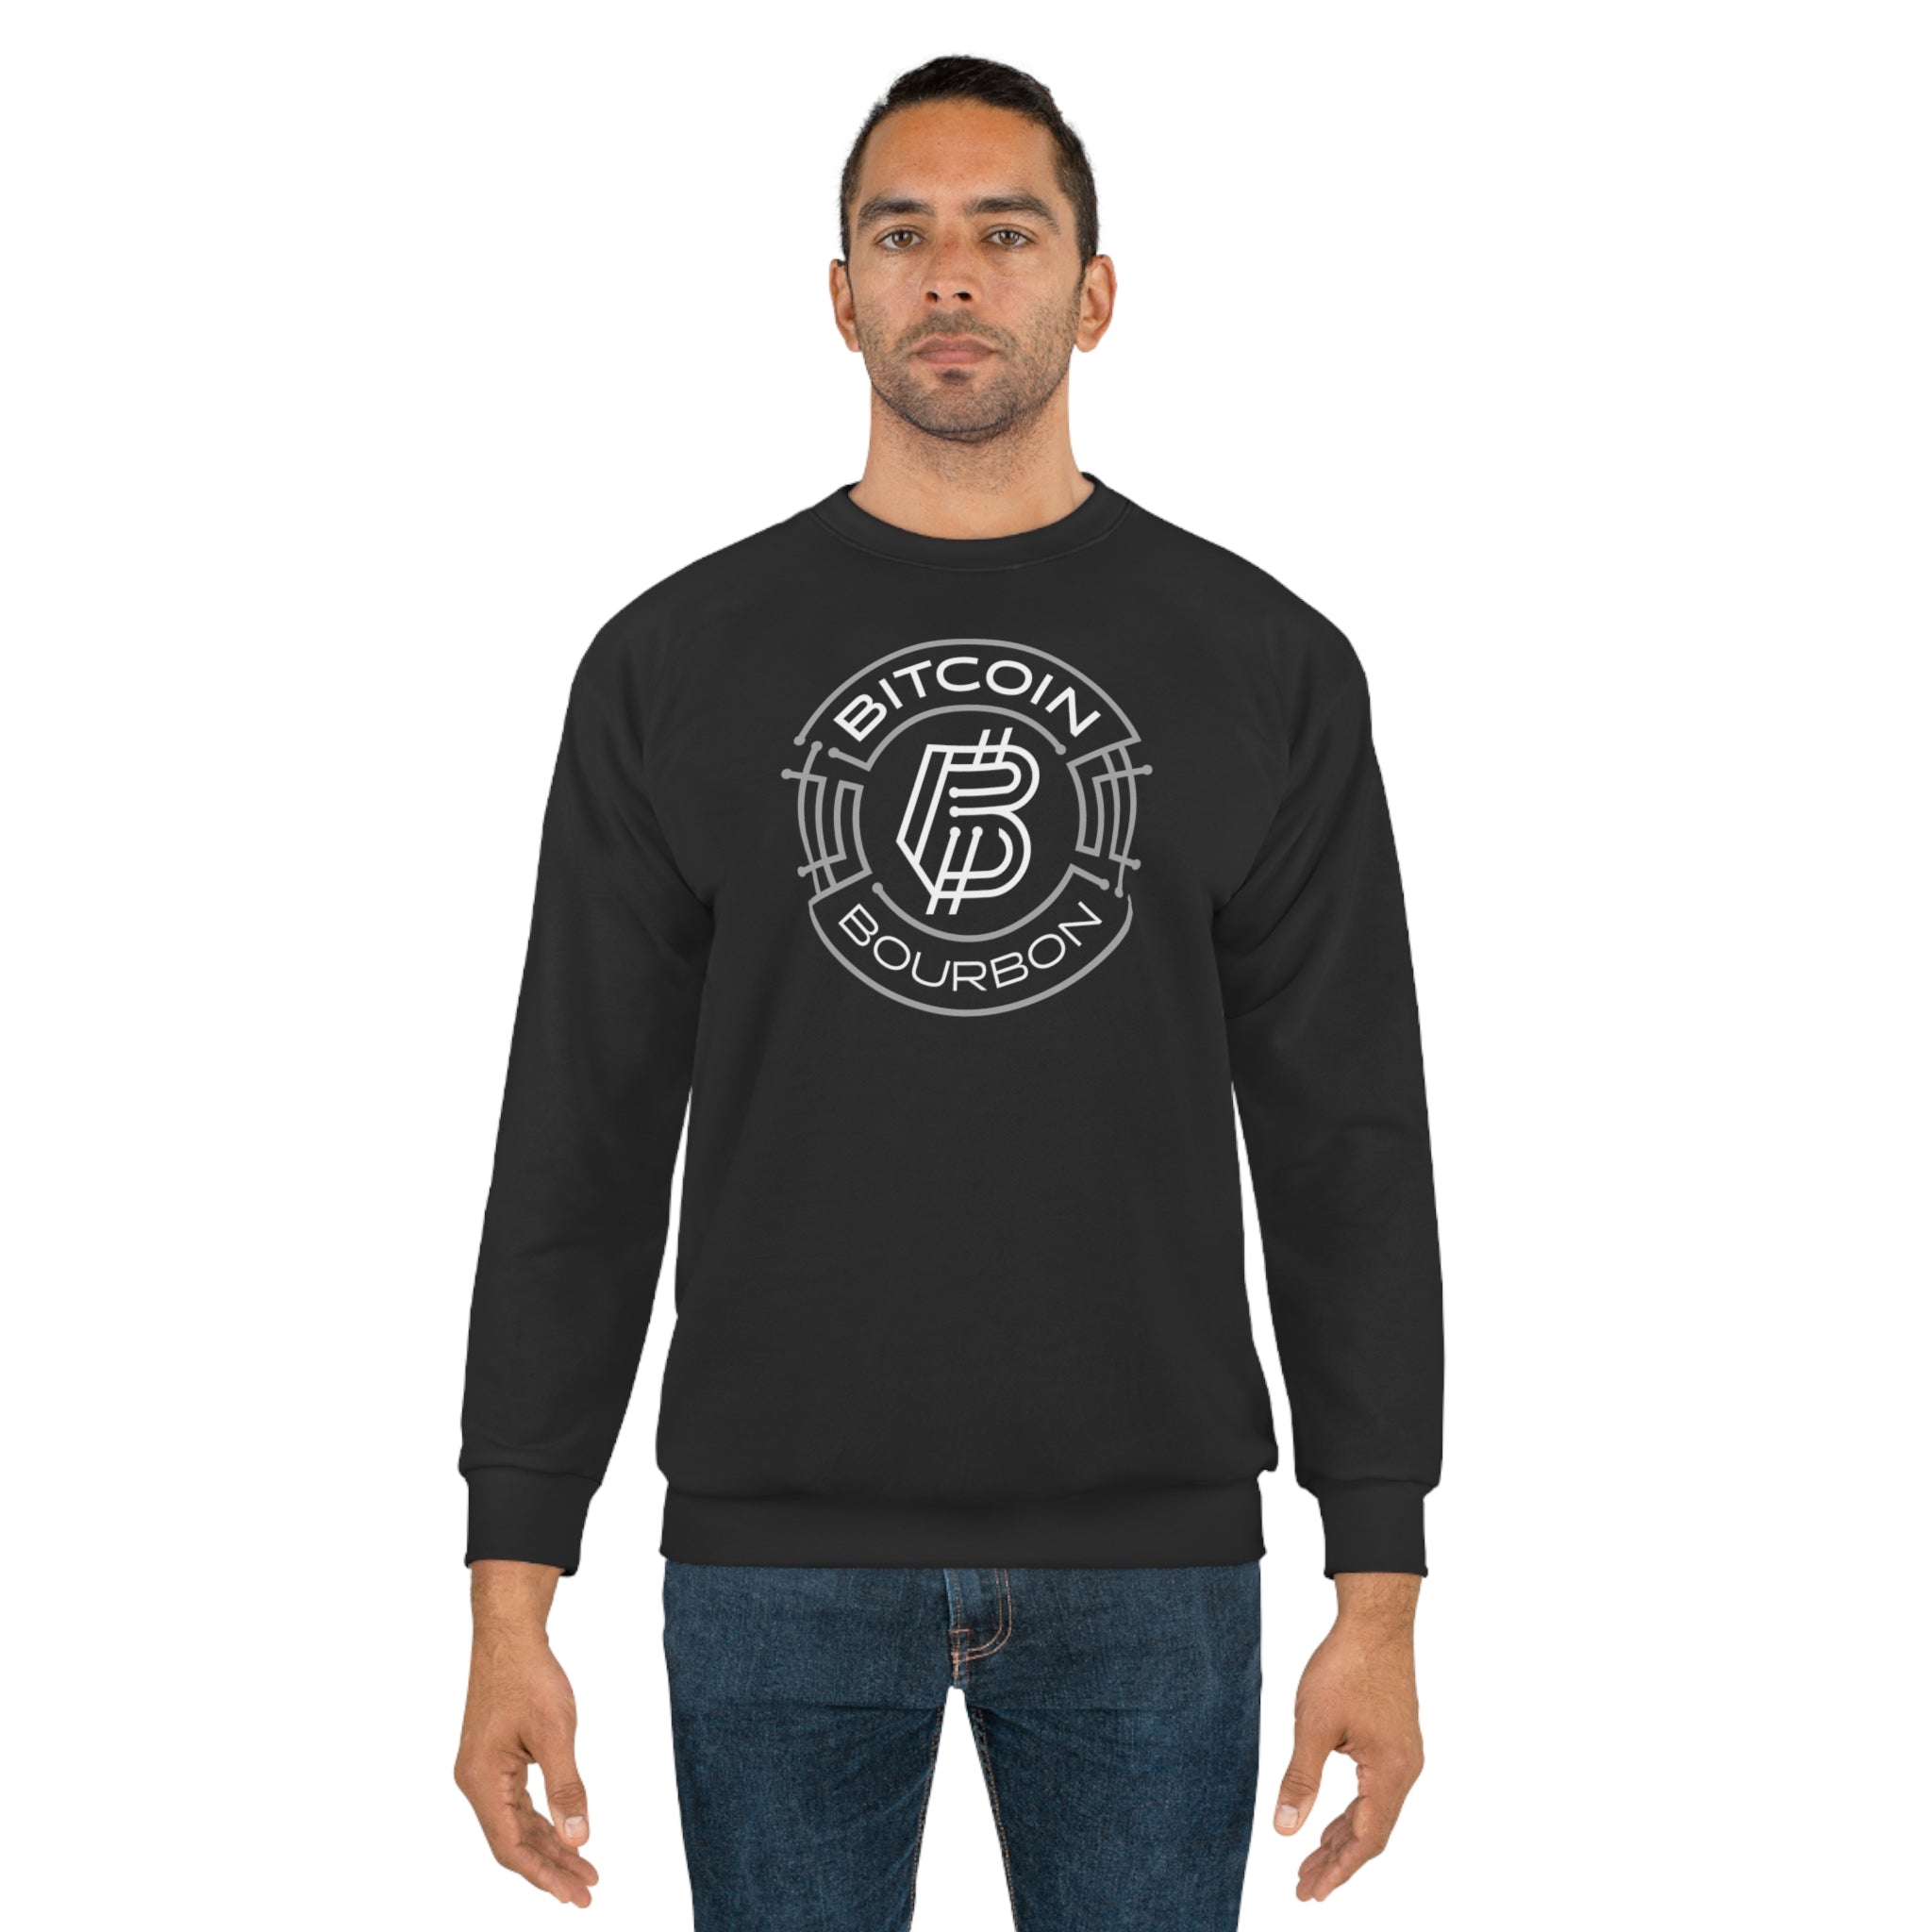 Bitcoin Bourbon Crew Neck Sweatshirt